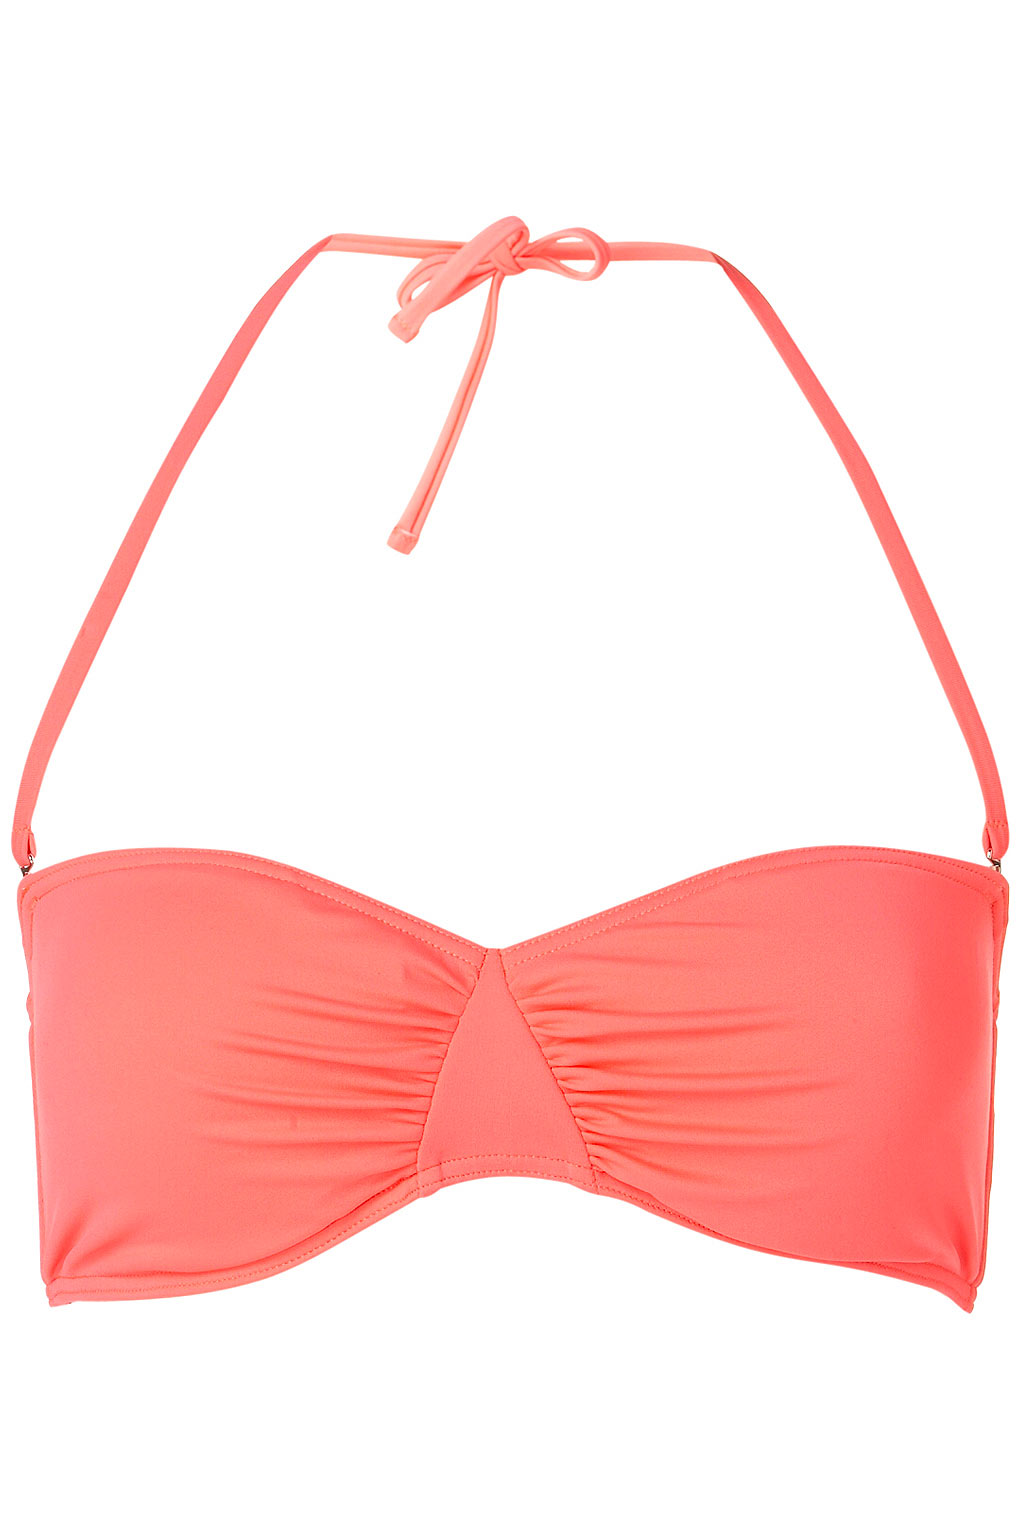 Lyst - Topshop Coral Bandeau Bikini Top in Pink